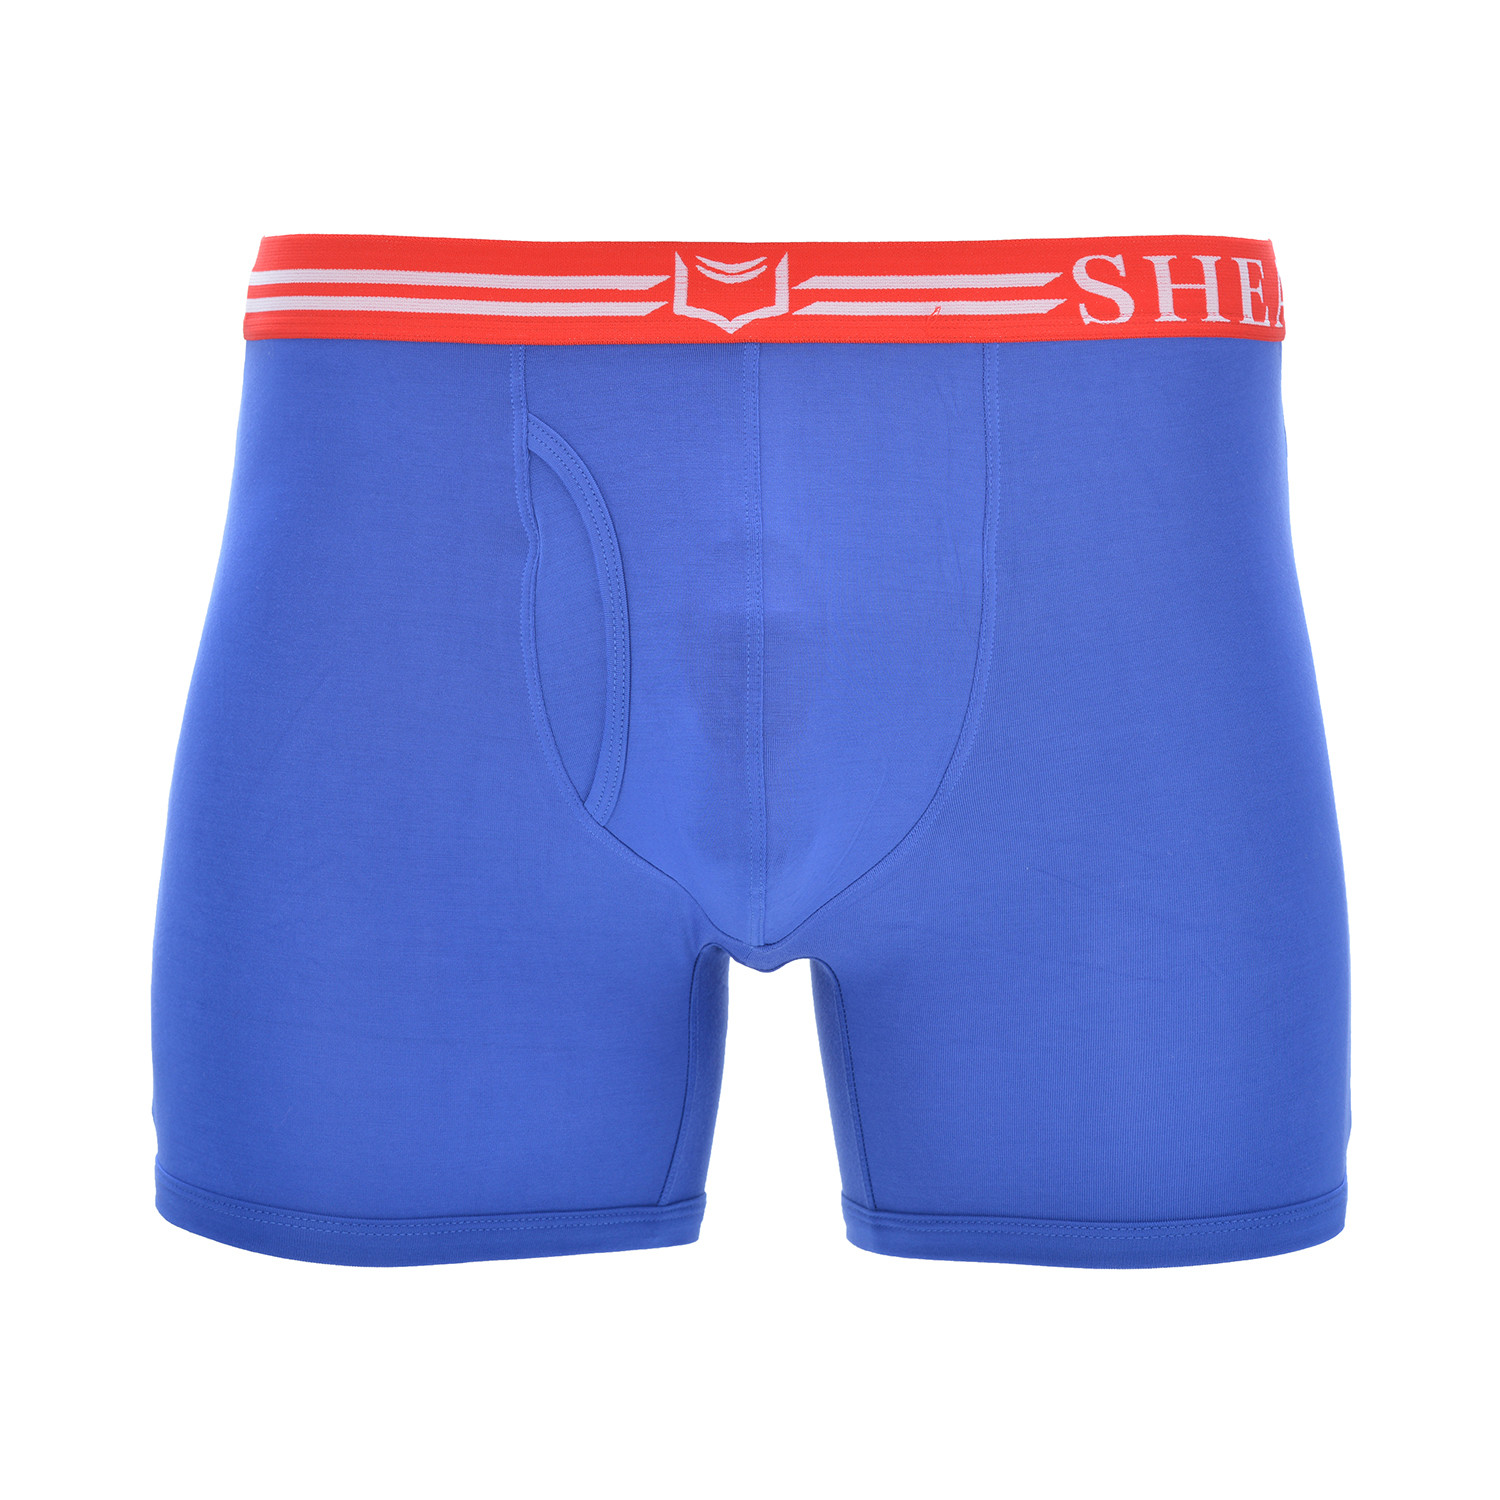 SHEATH 4.0 Men's Dual Pouch Boxer Brief // Red, White + Blue